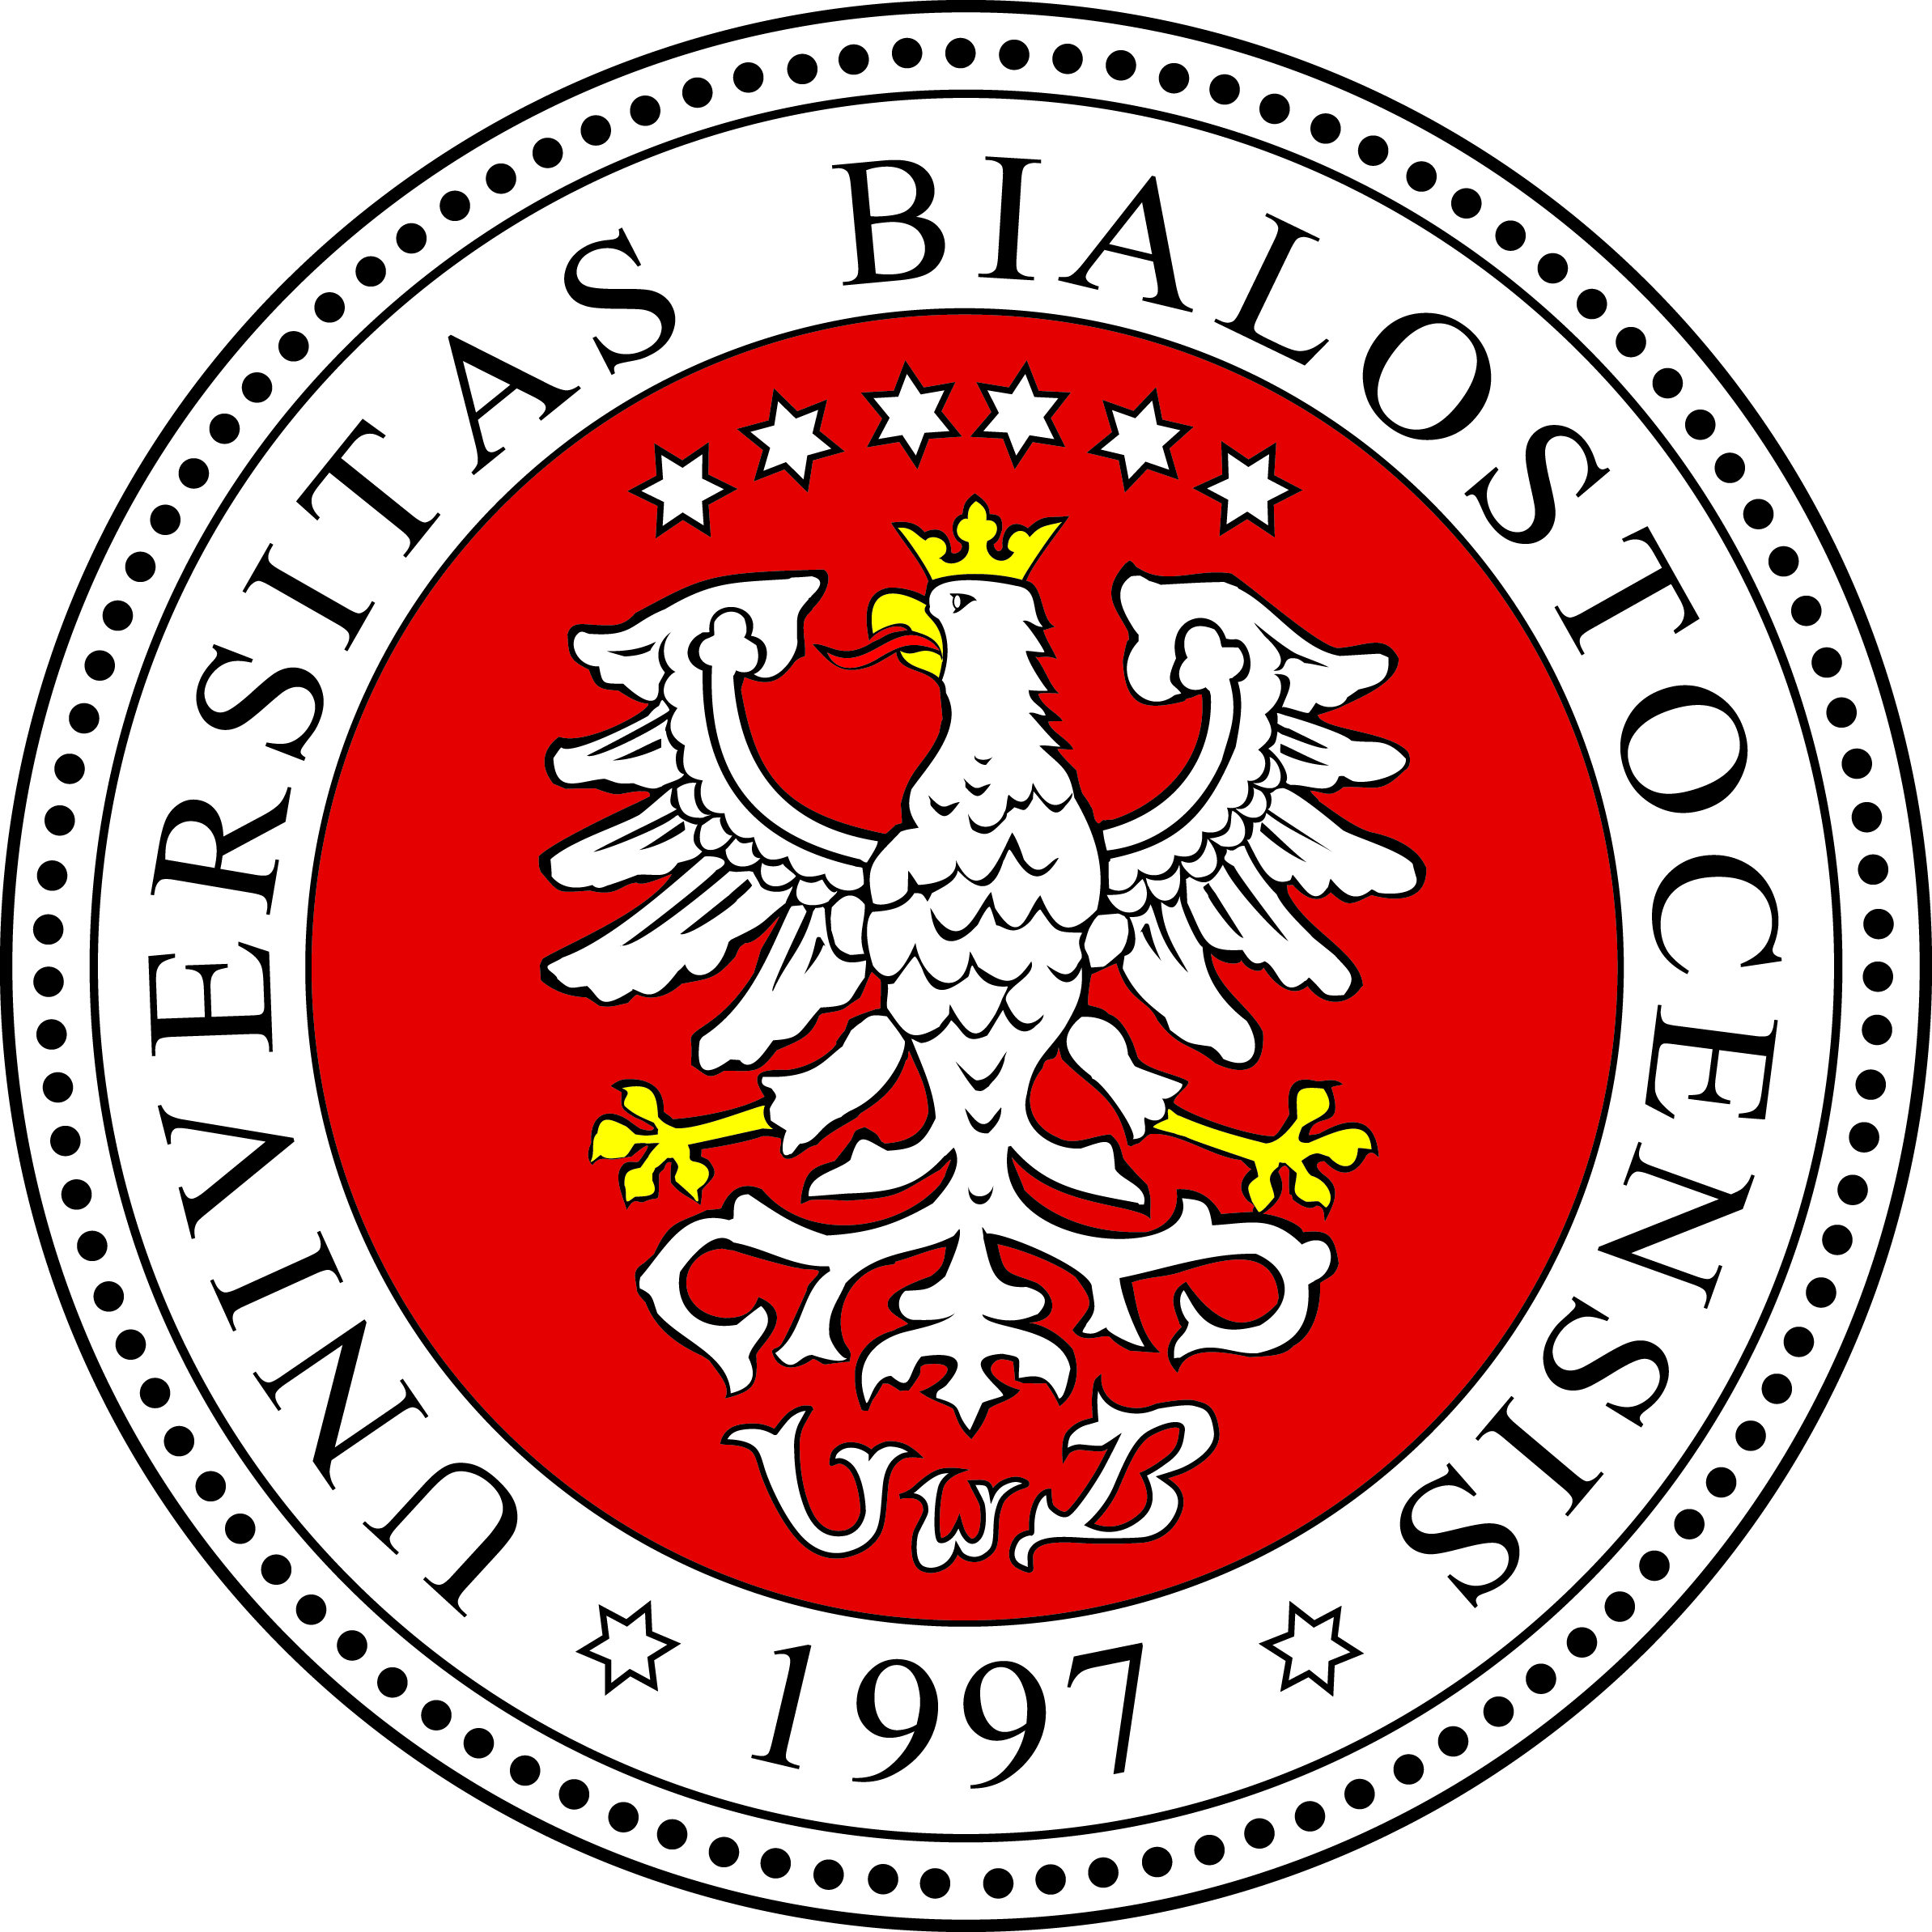 University of Białystok